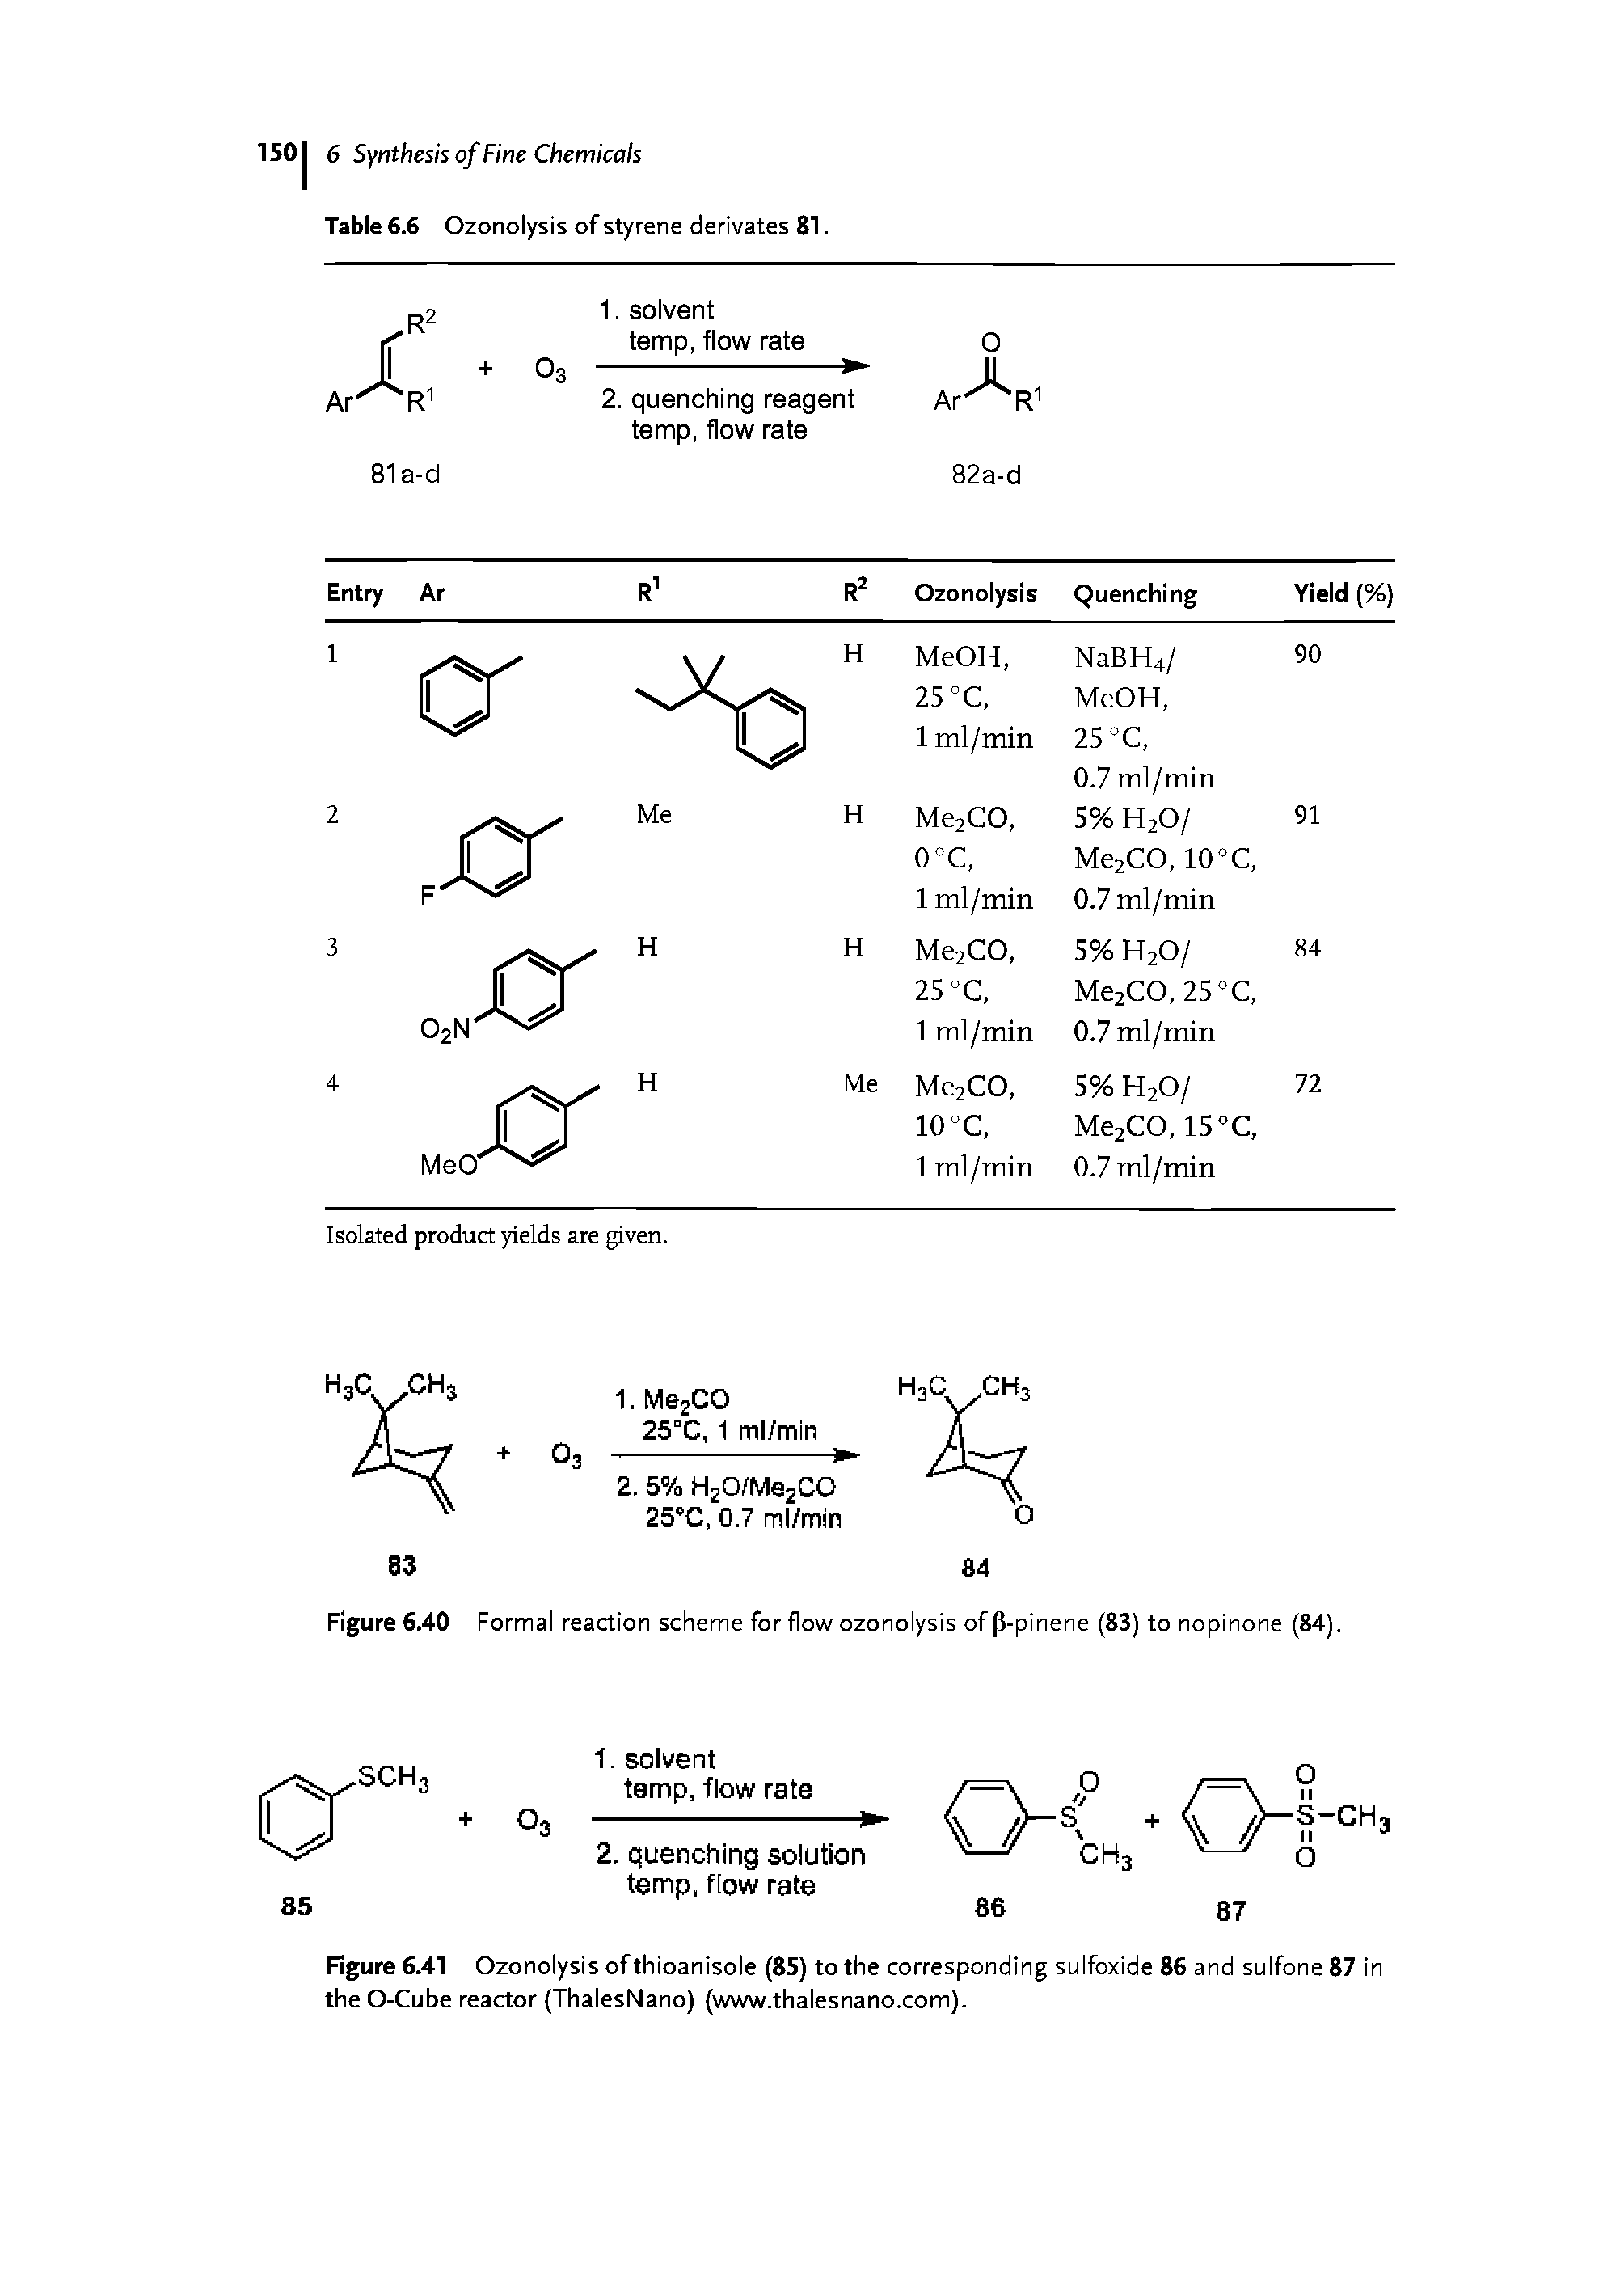 Figure 6.40 Formal reaction scheme for flow ozonolysis of p-pinene (83) to nopinone (84).